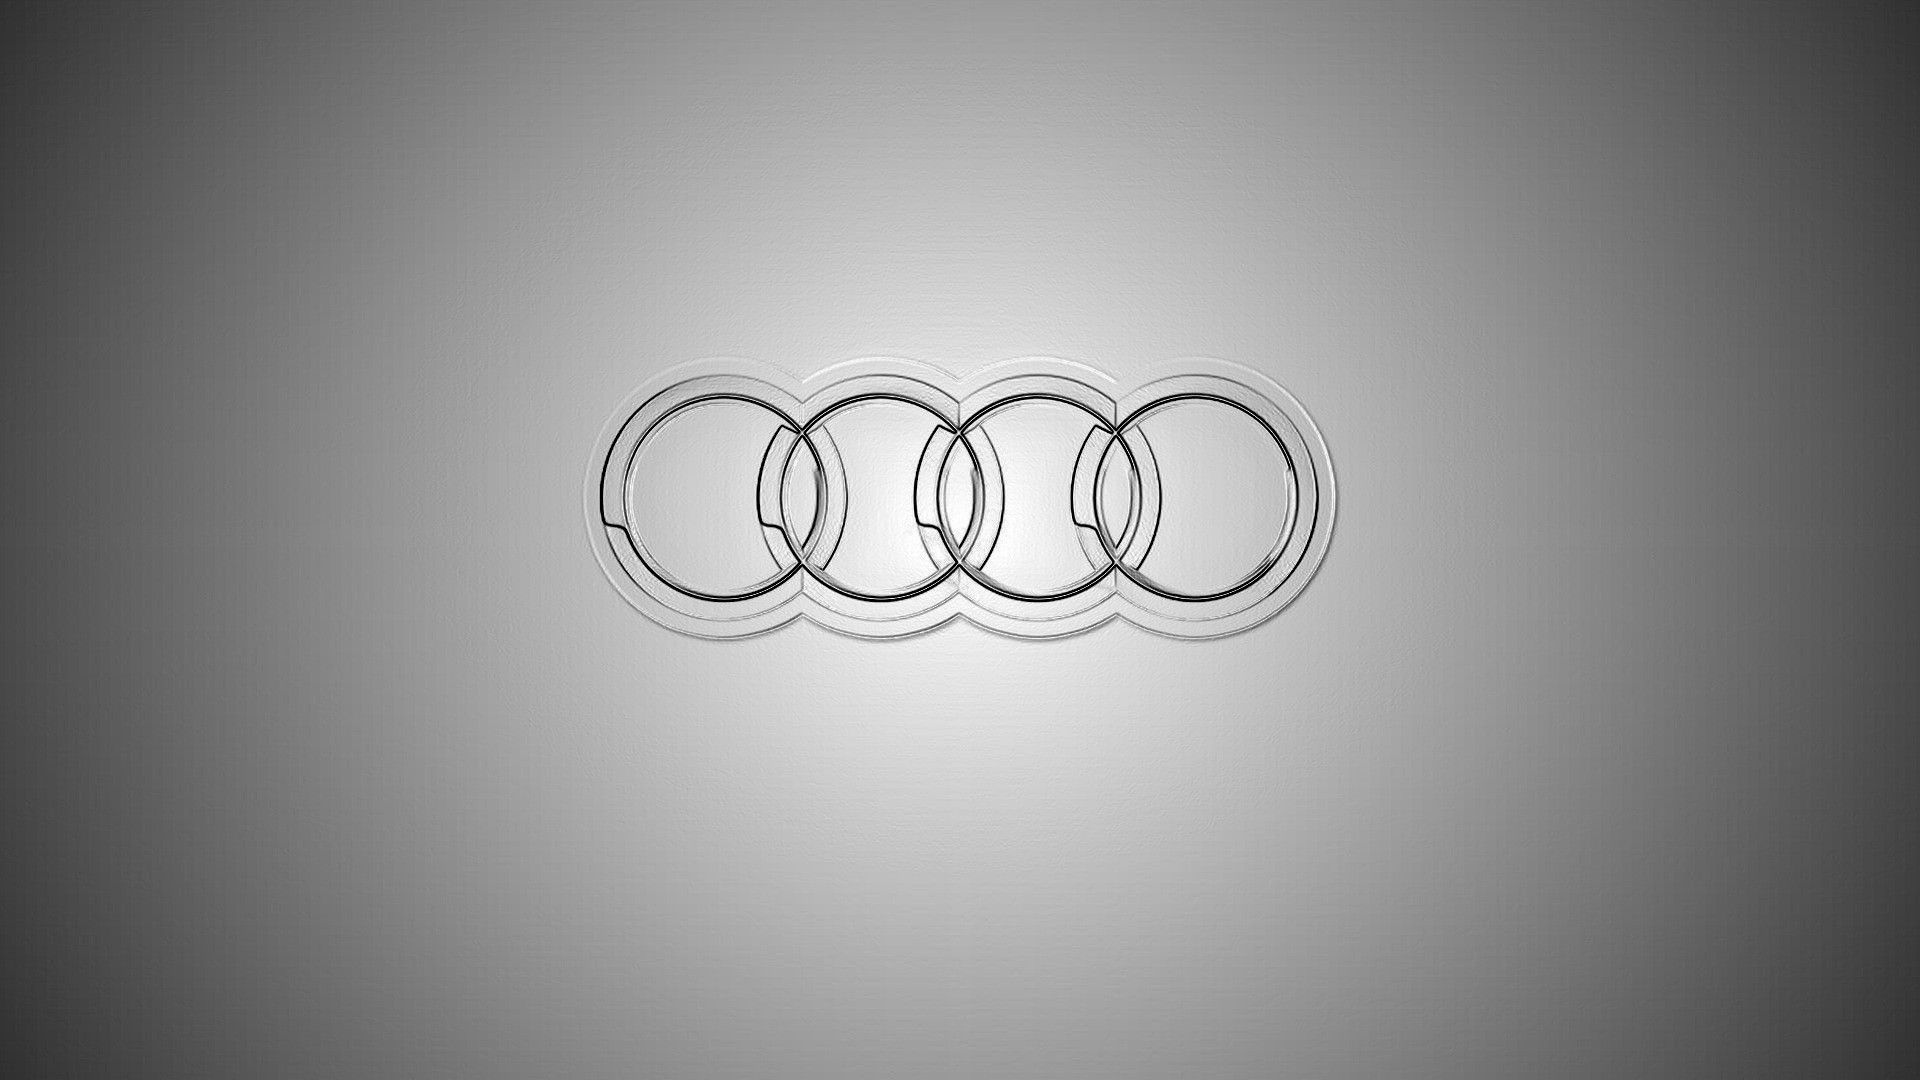 1920x1080 Glass Audi Logo Wallpaper 58772 1920x1080px on WallpaperBat.